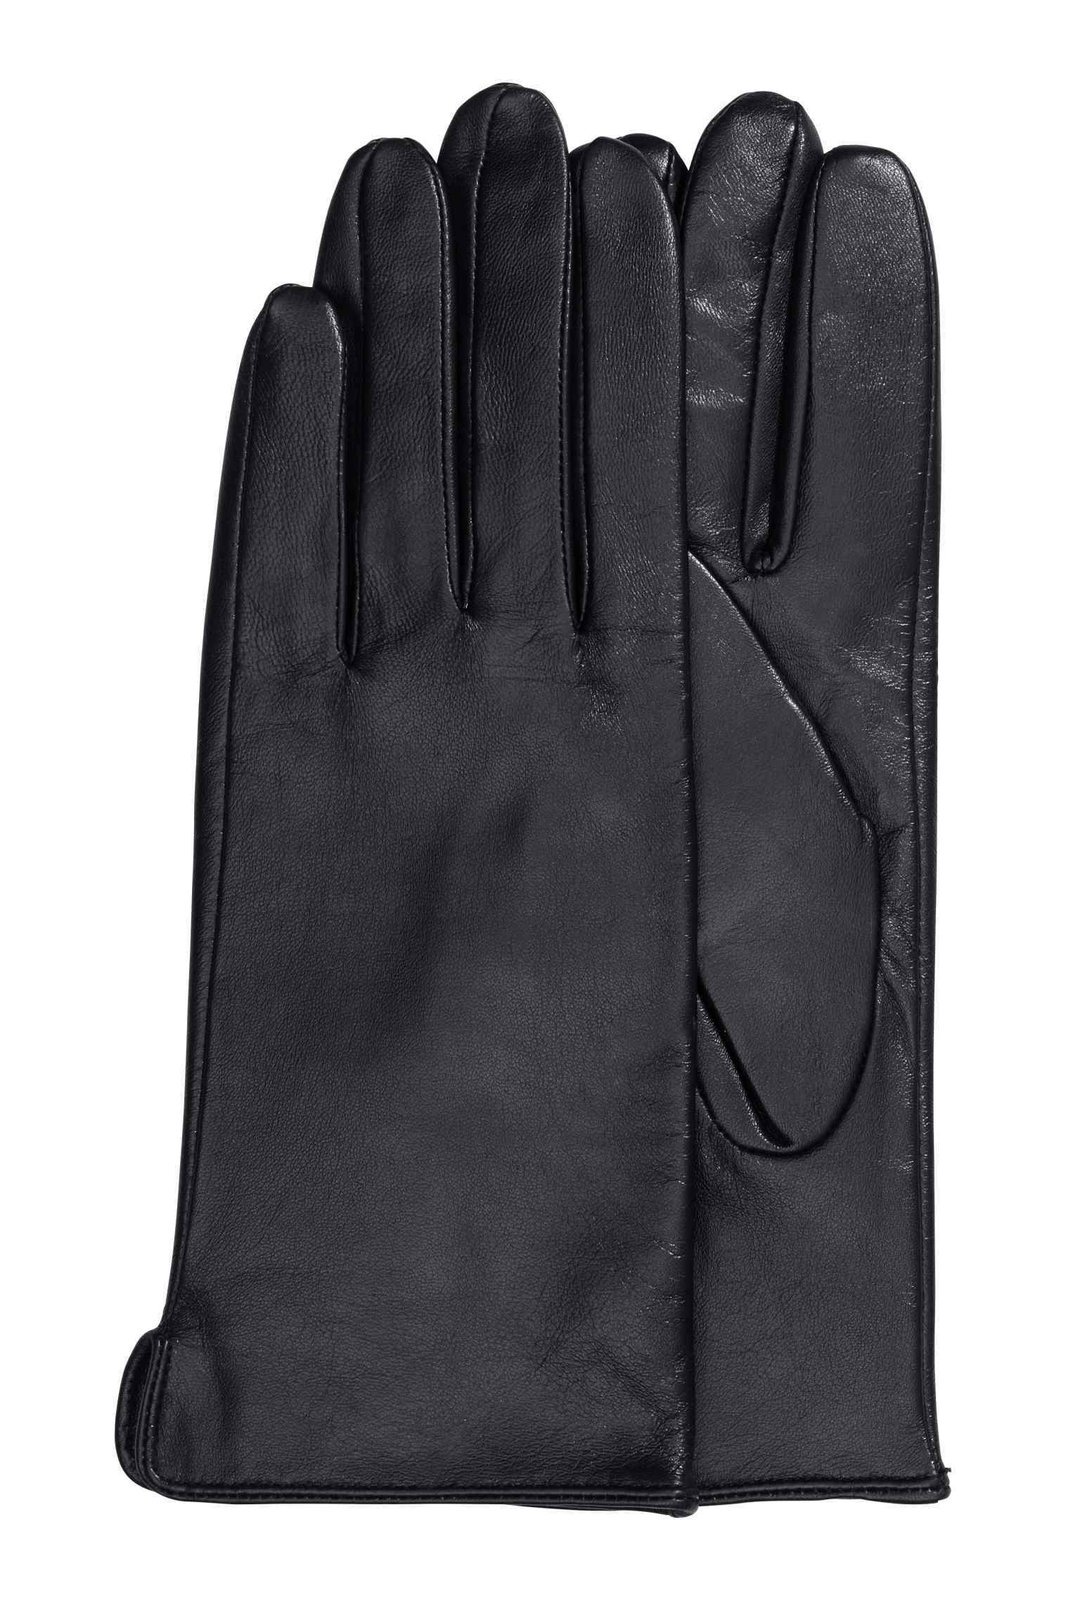 Kožené rukavice, HM, 599 Kč.